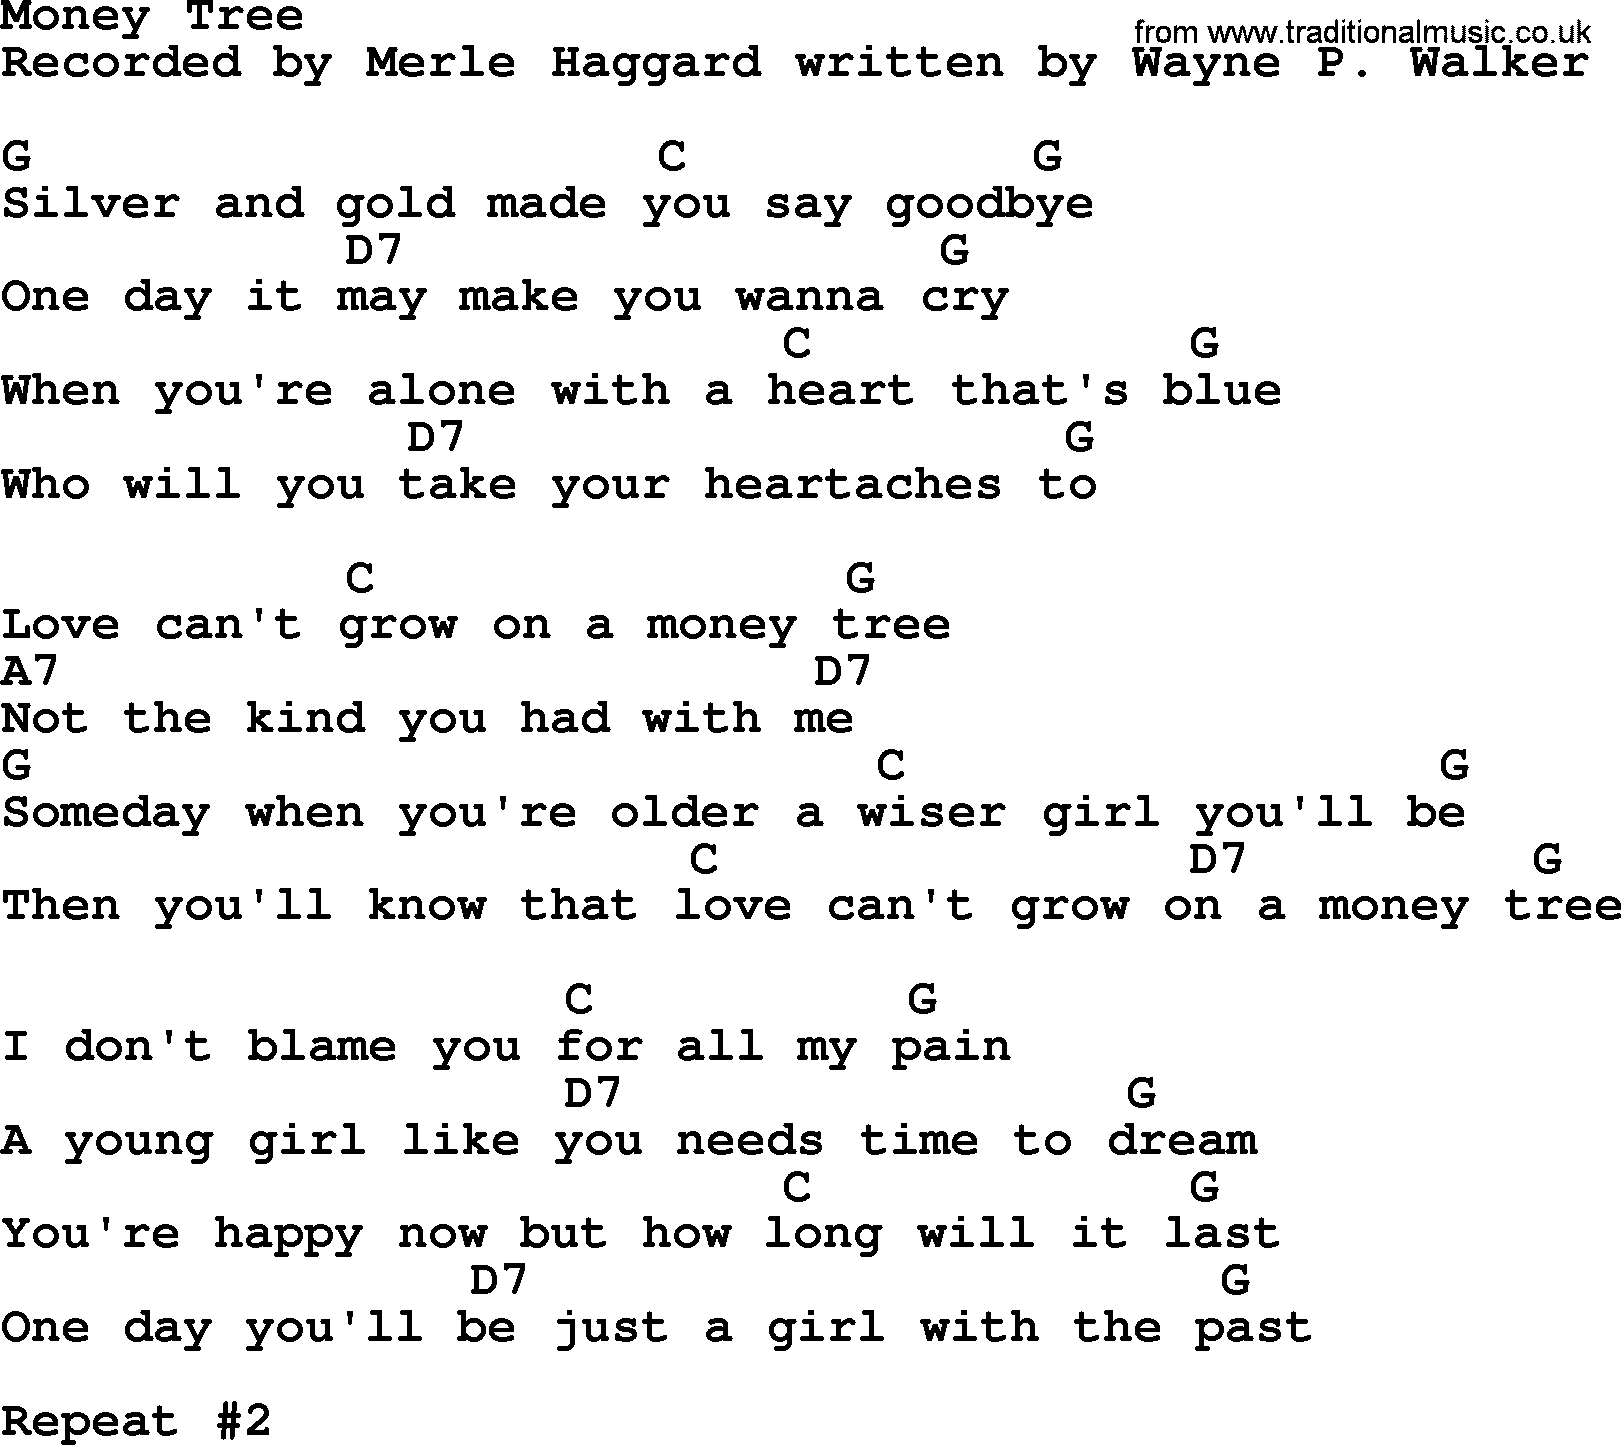 Merle Haggard song: Money Tree, lyrics and chords